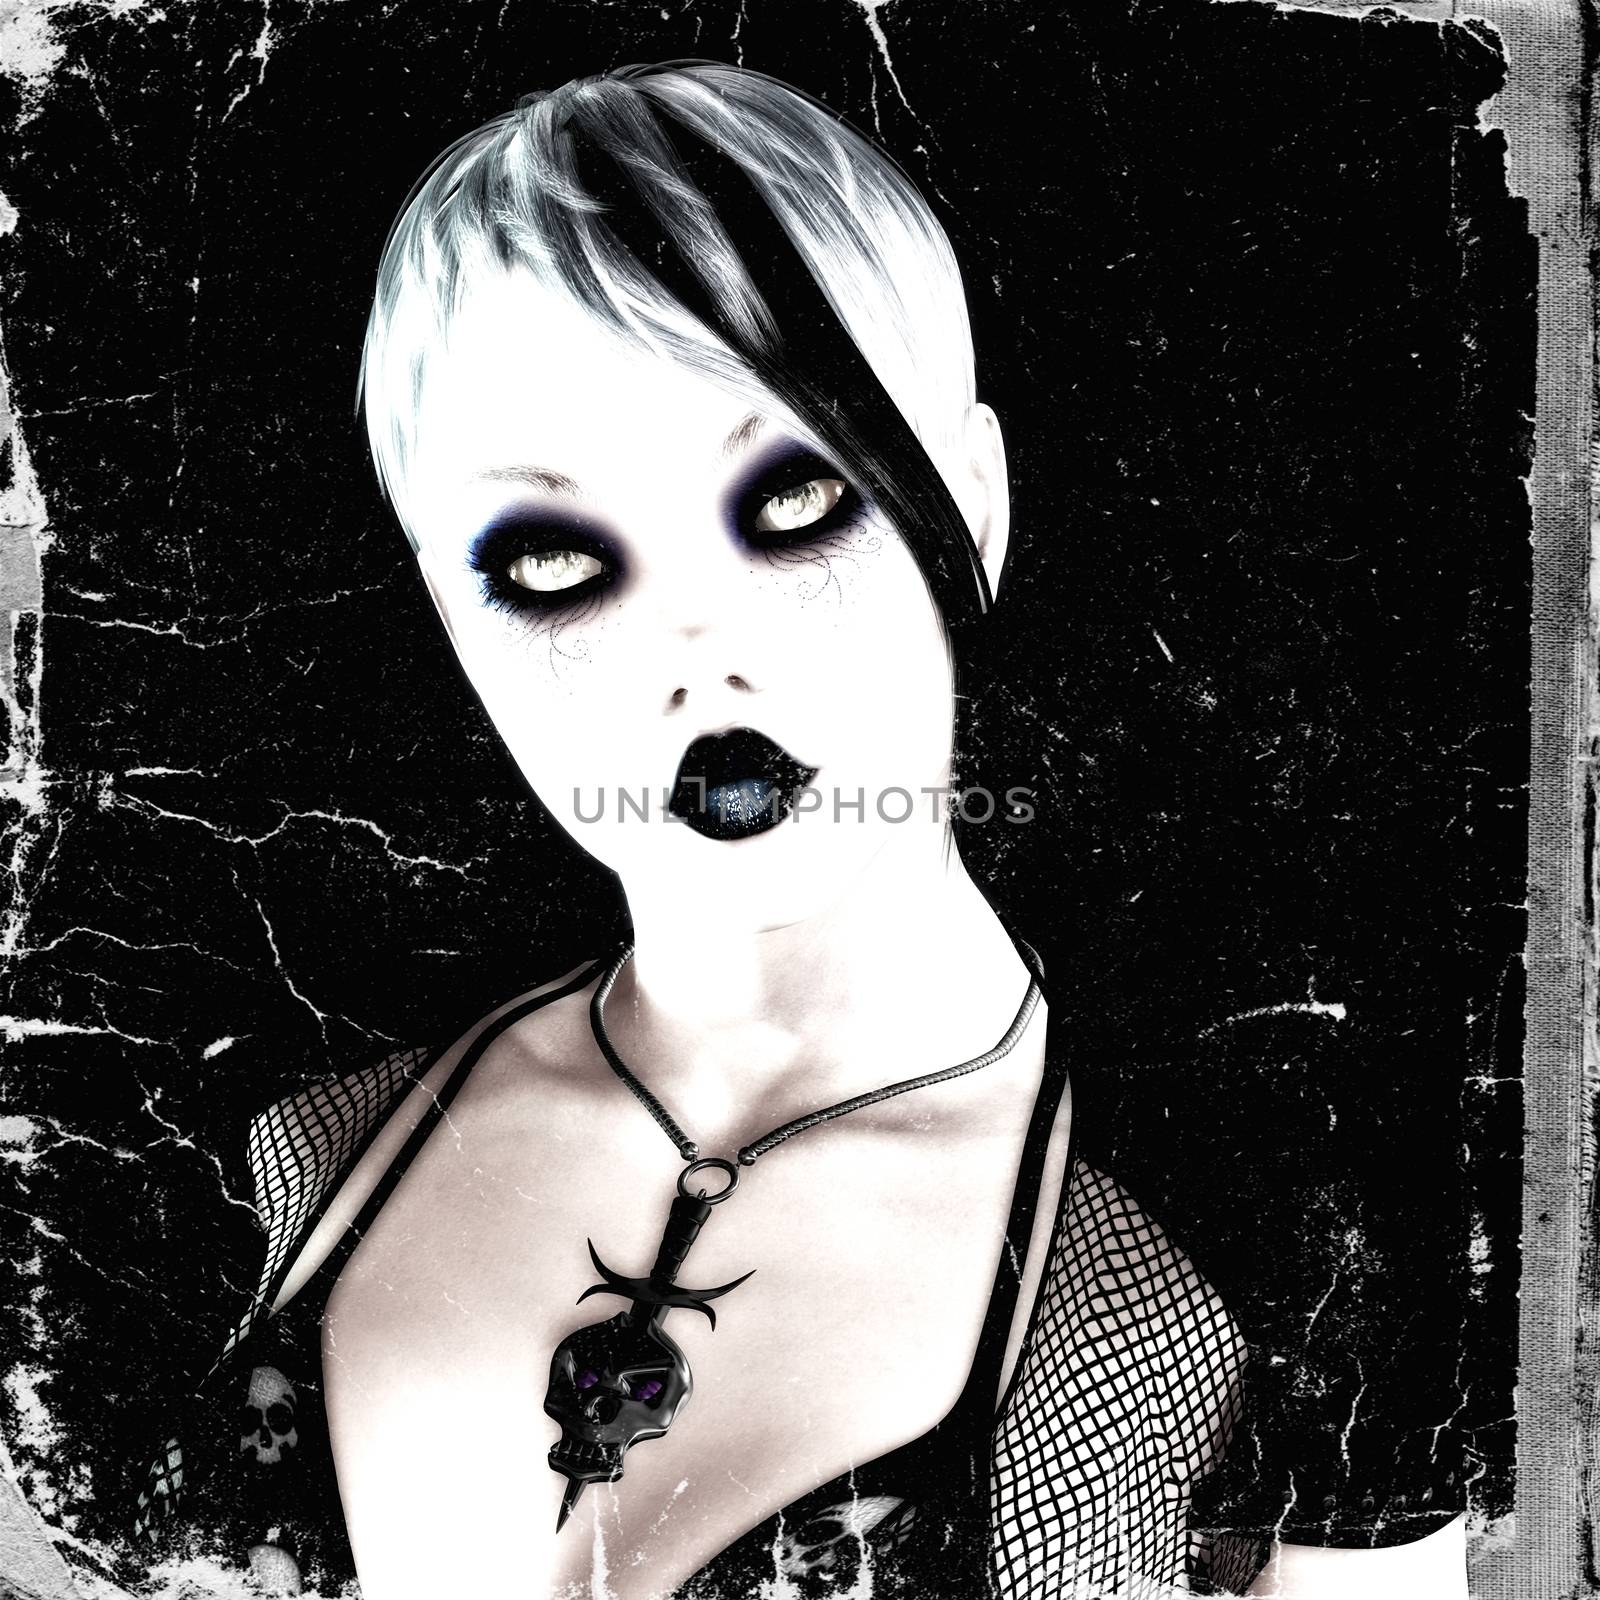 Digital Illustration of a Gothic Female